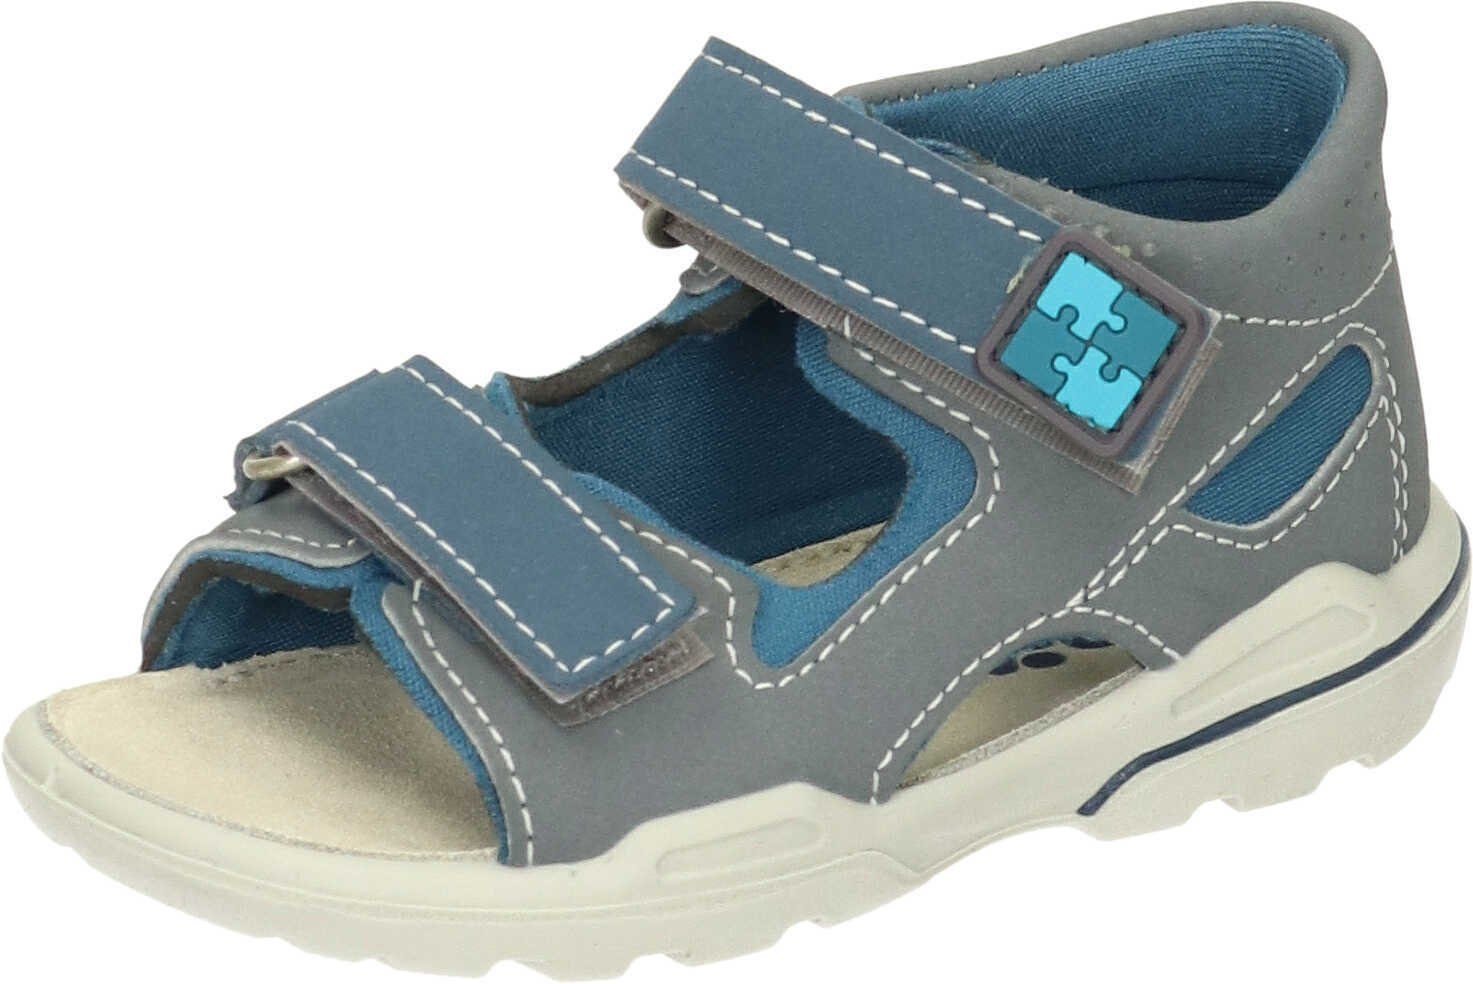 Sandaletten aus Pepino graphit/petrol Textil Outdoorsandale (450)